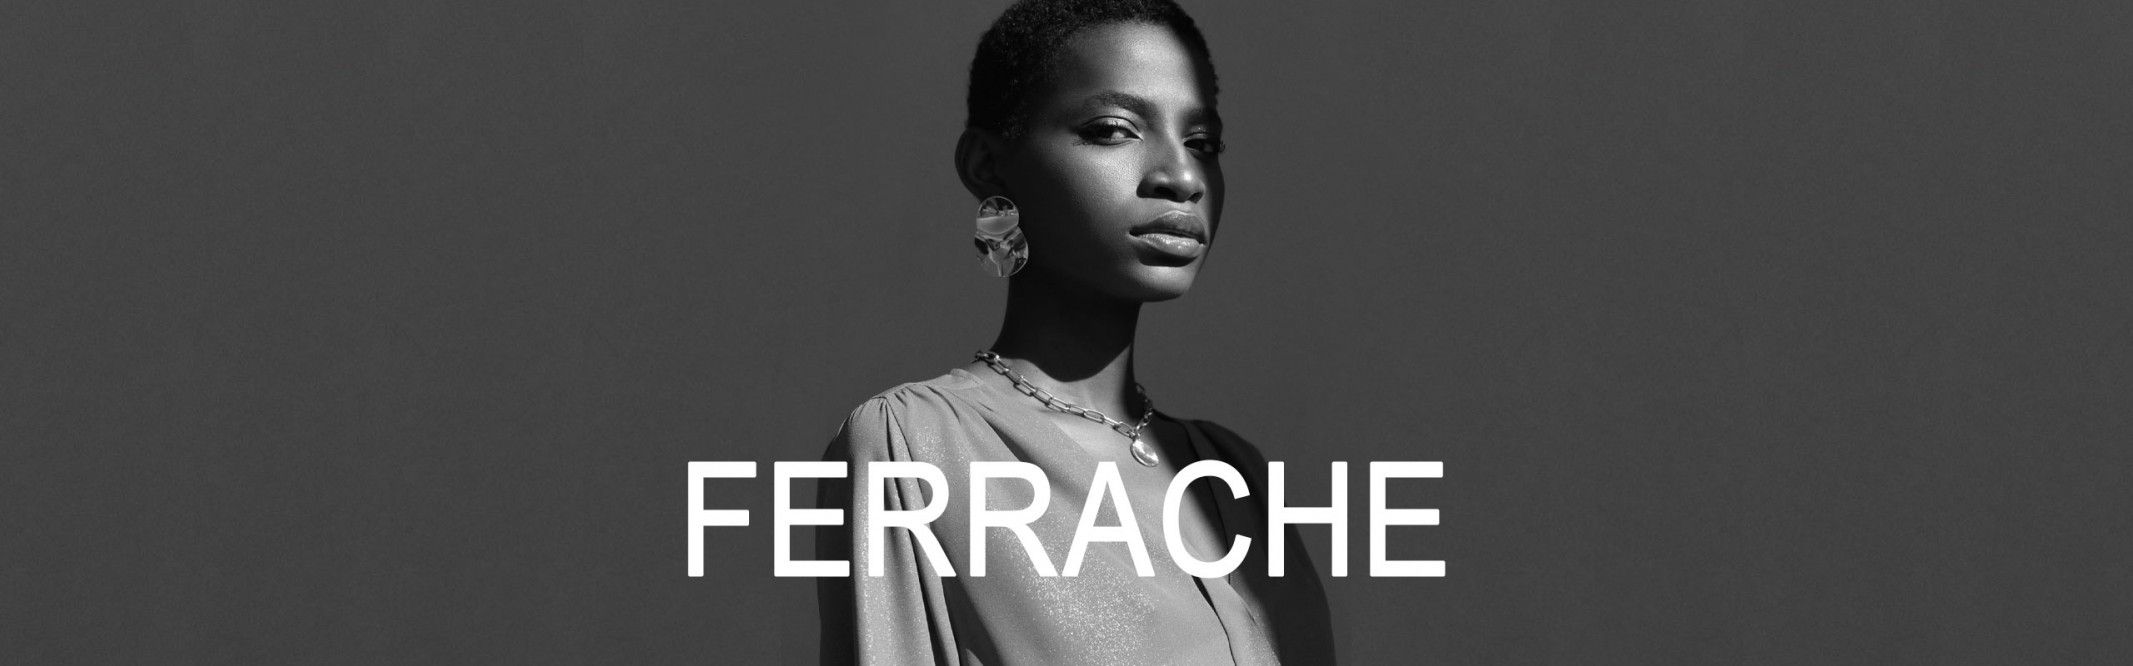 ferrache fashion brand store about us woman lady online